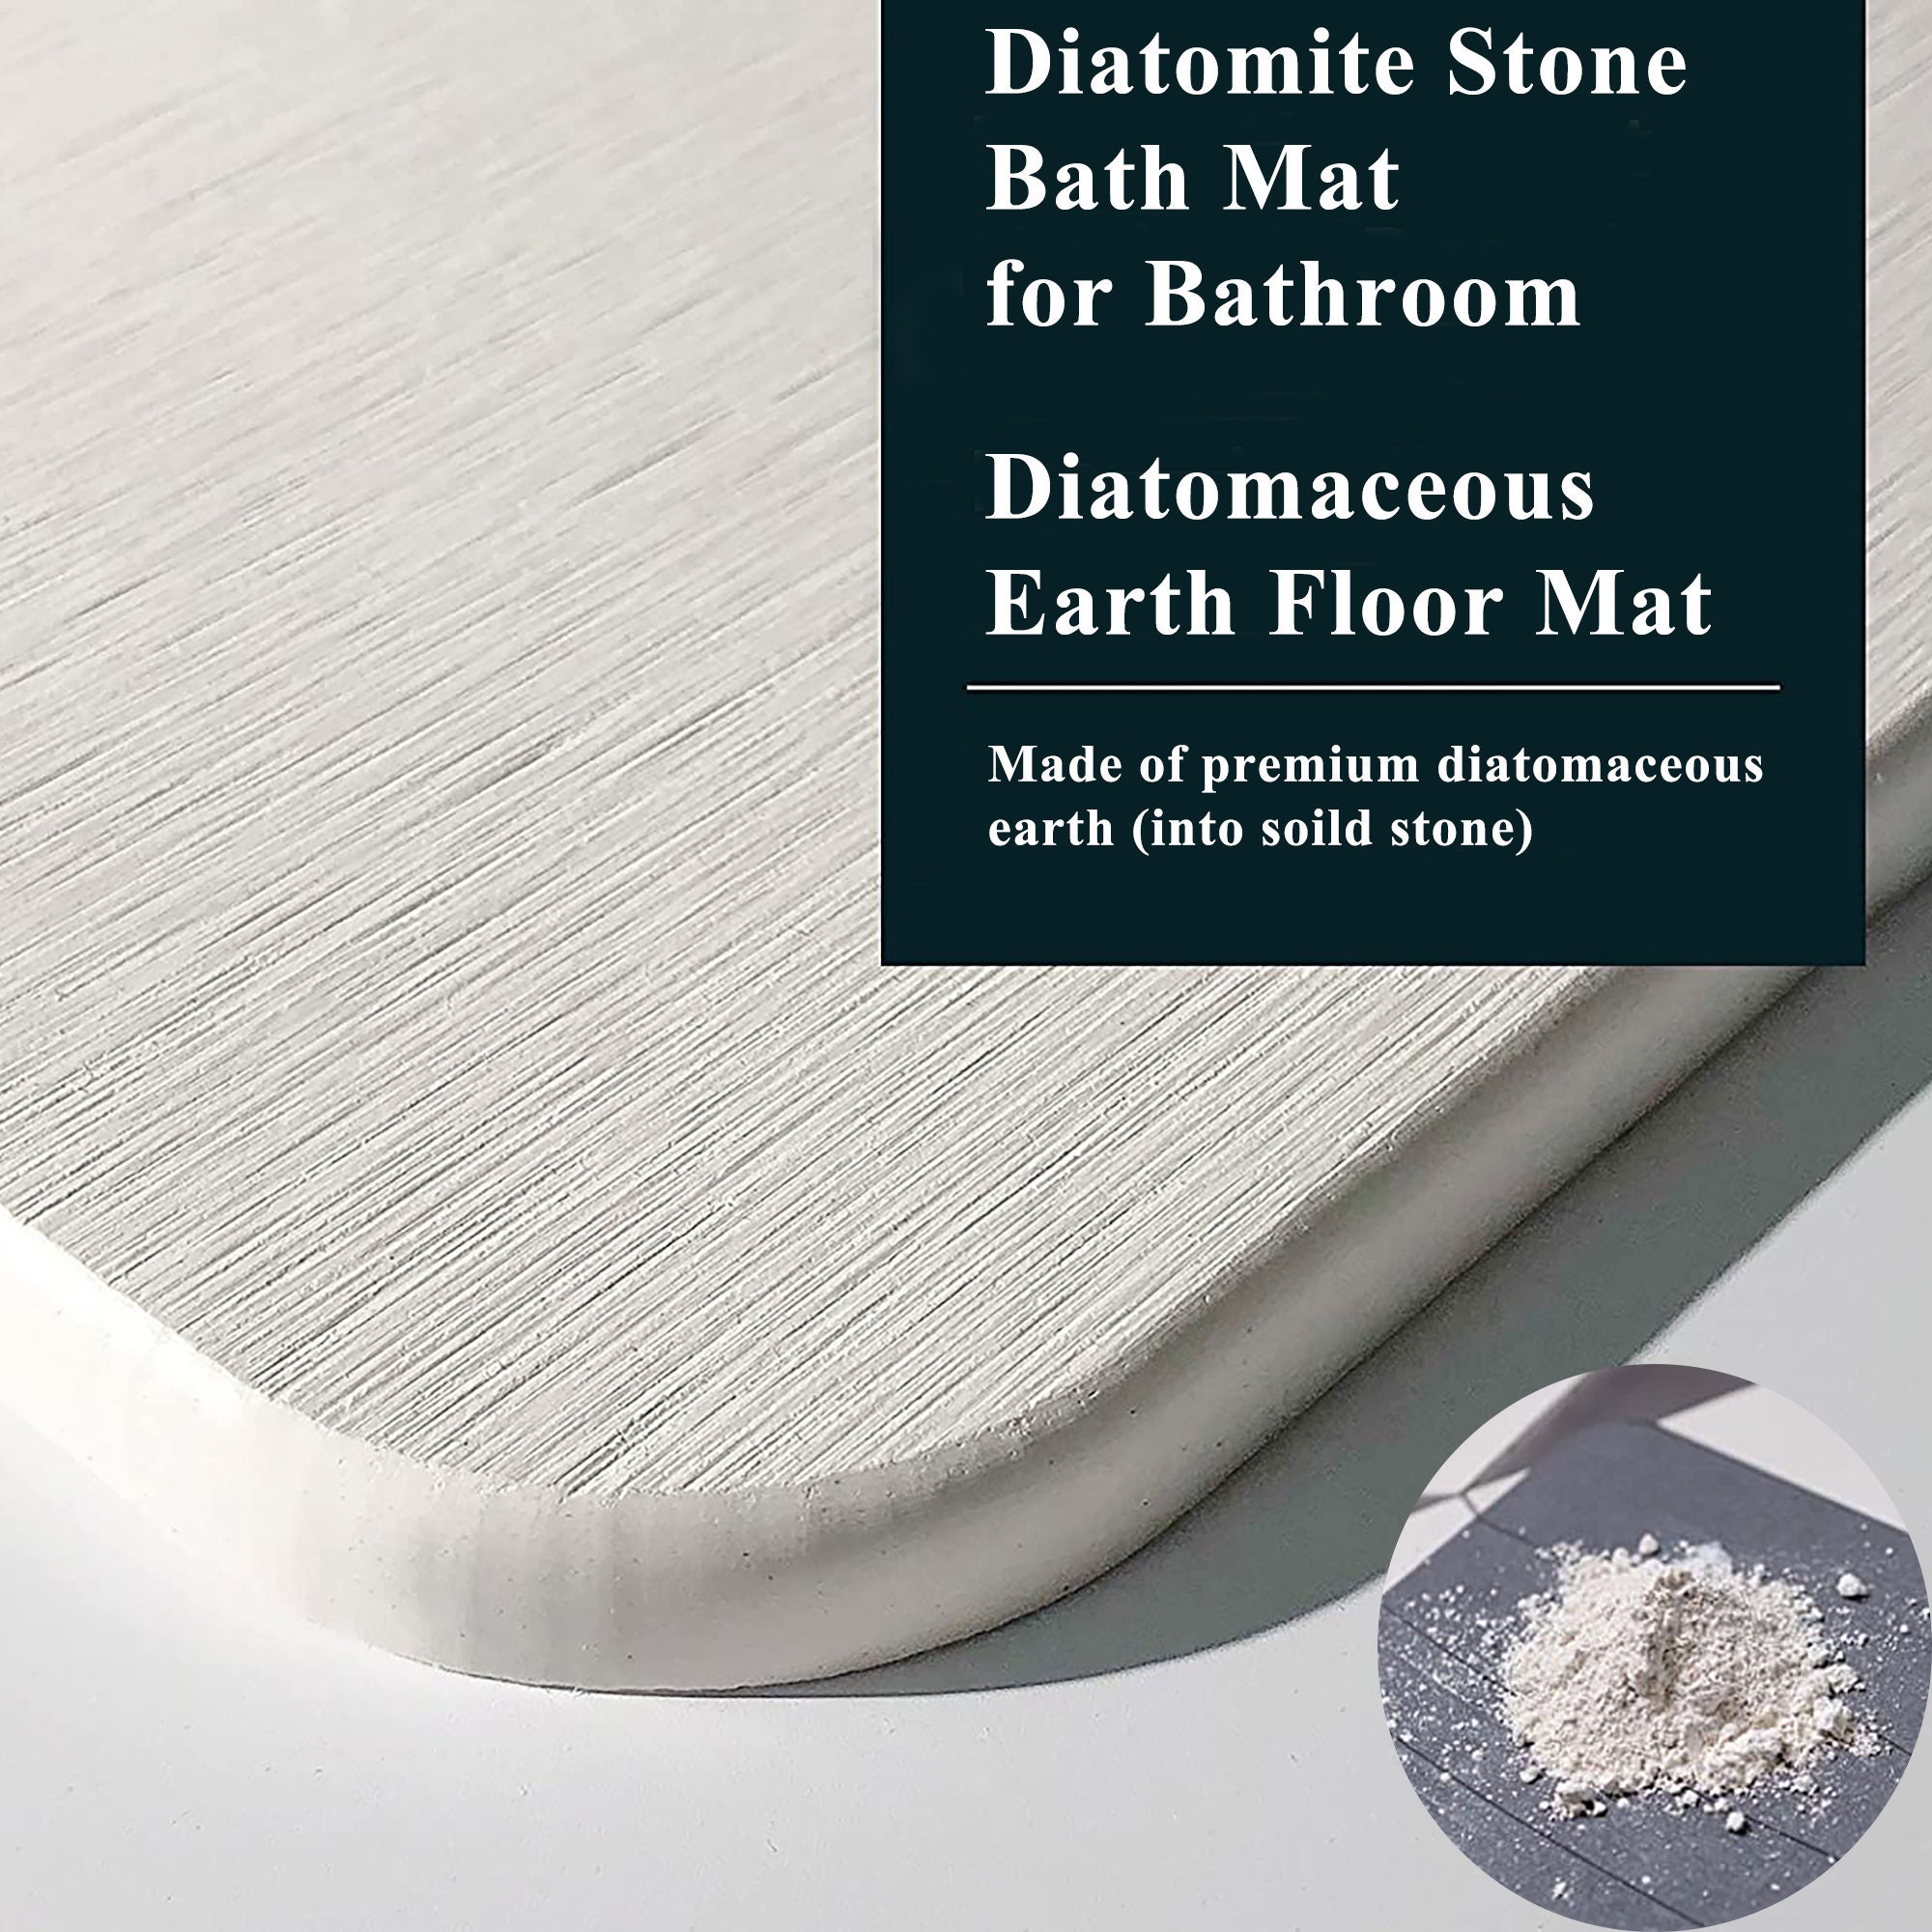 Engraving Custom Diatomite Stone Bath Mat, Quick Dry Bath Mat, Line 6 Bathroom  Rug, Rugs for Bathroom Nonslip, Bathroom Decor Gift 